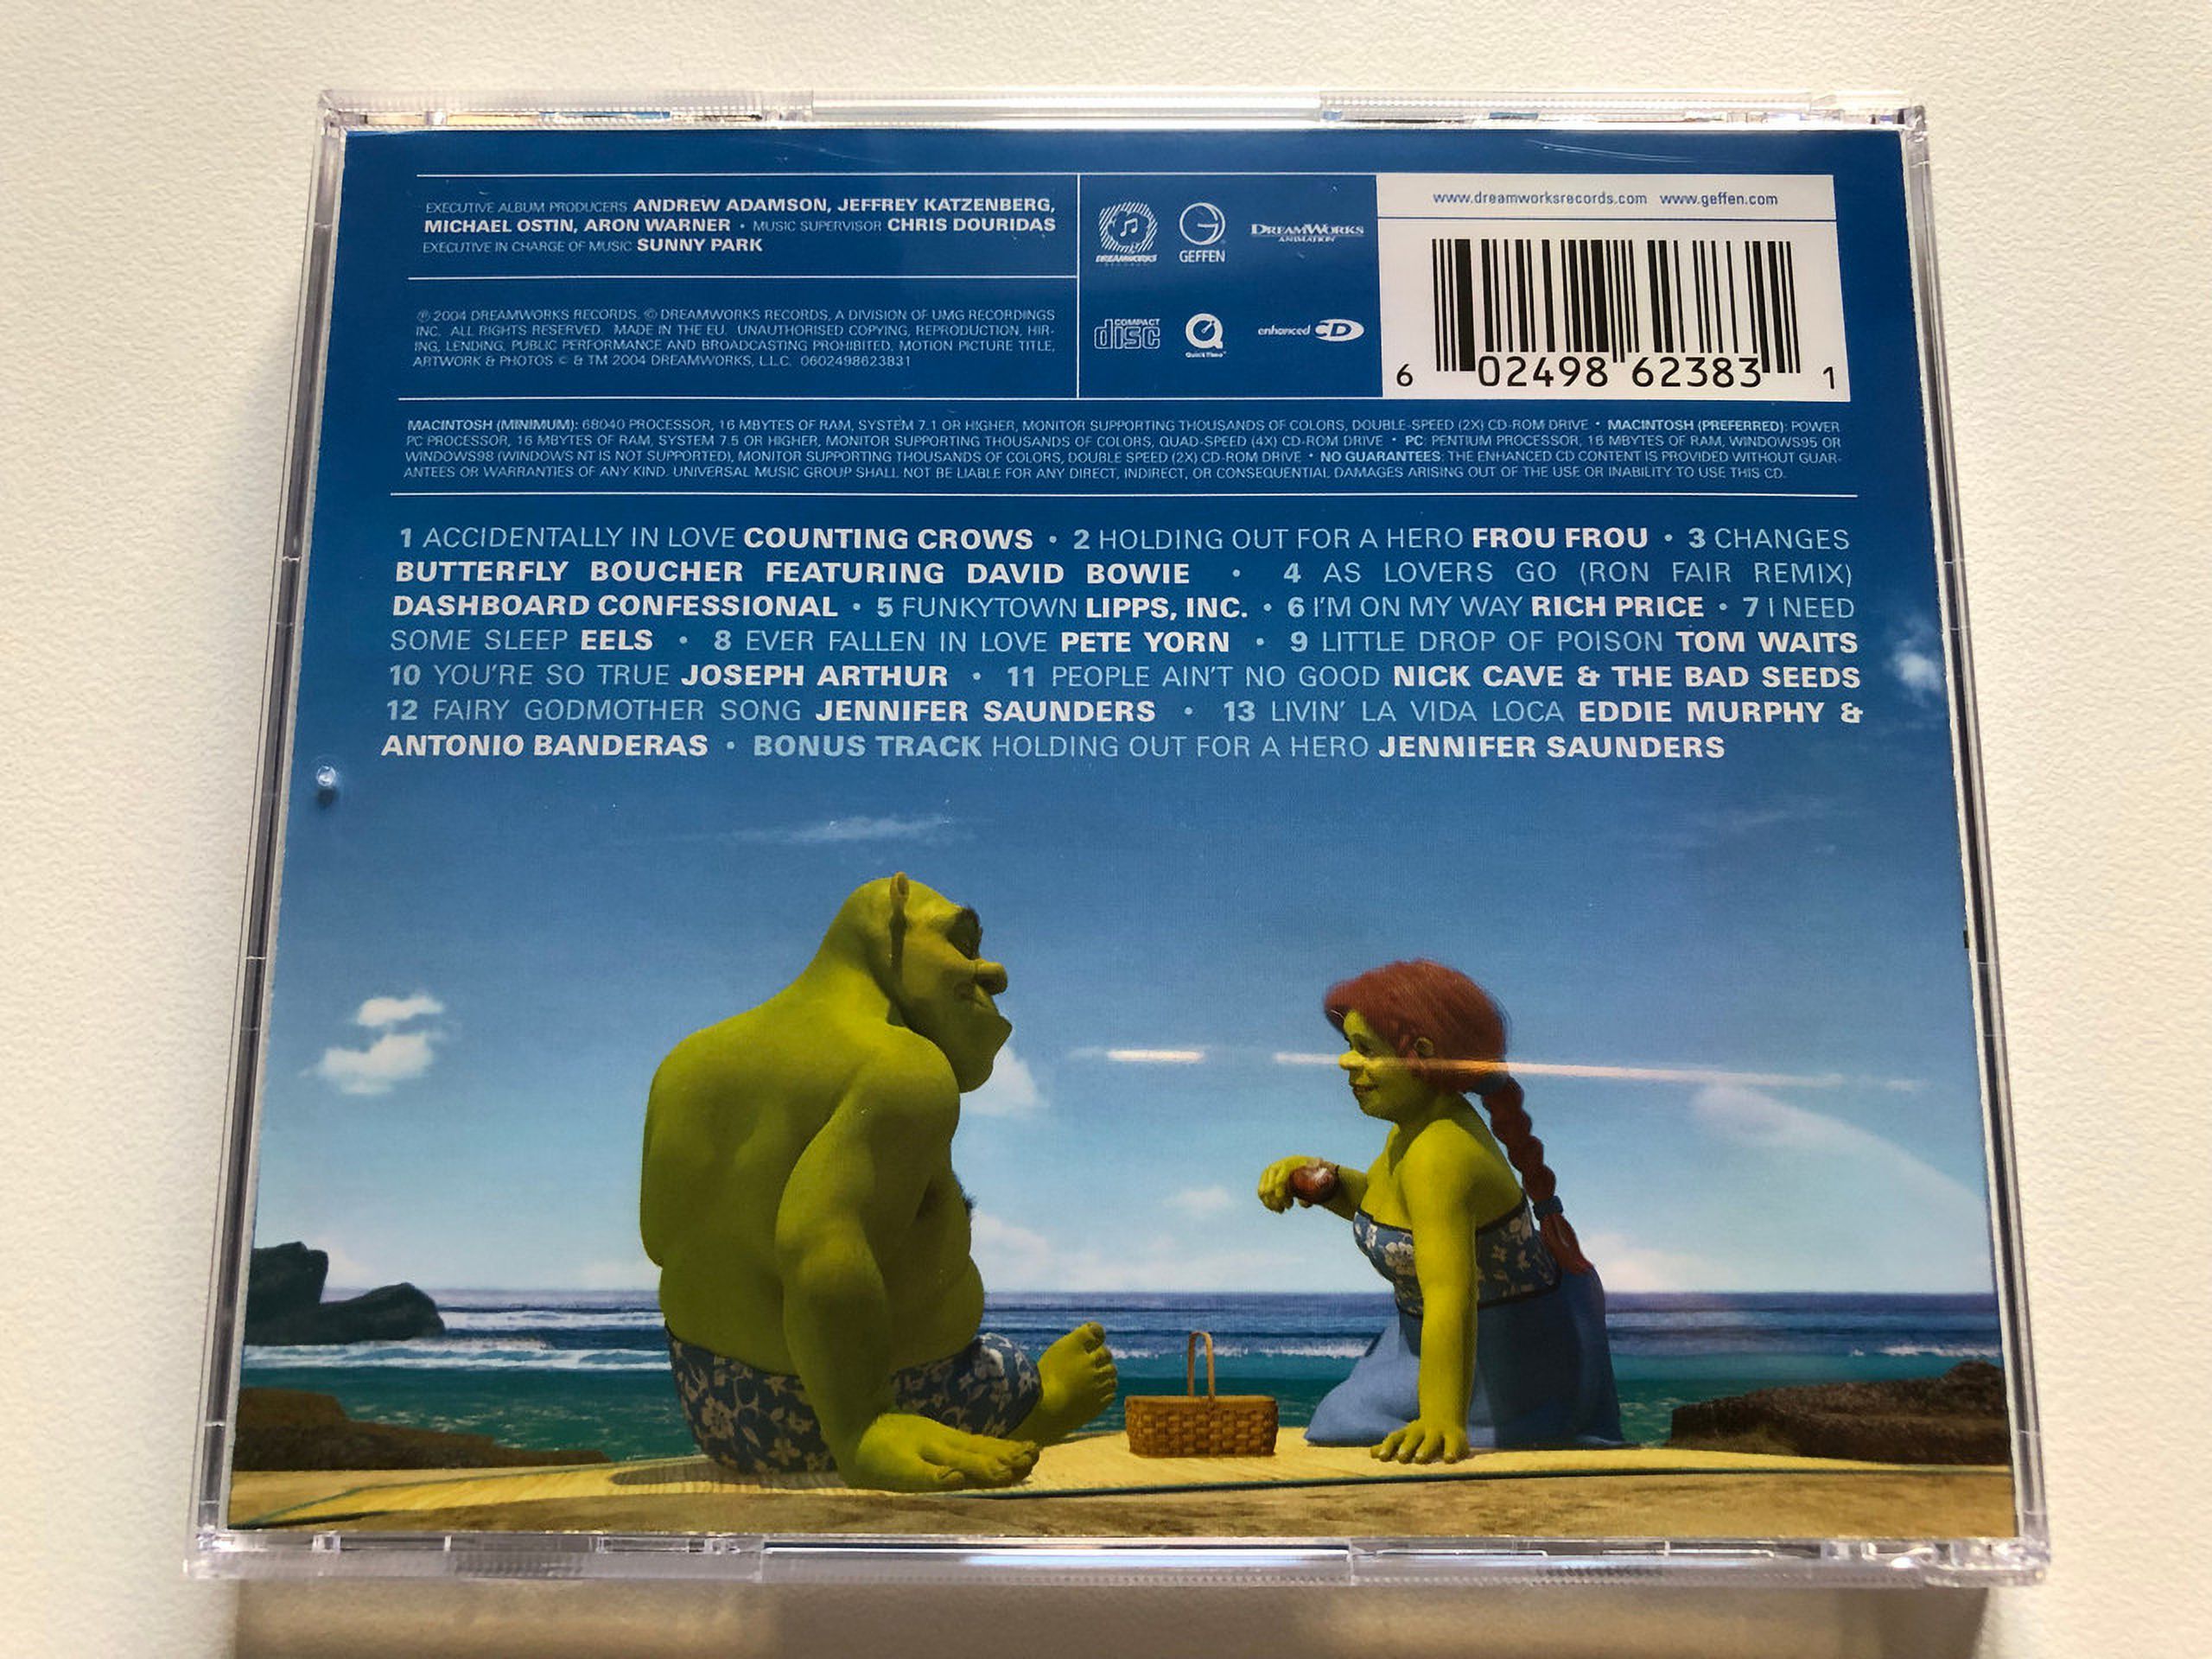 Shrek 2 Soundtrack (CD) - image 3 of 3